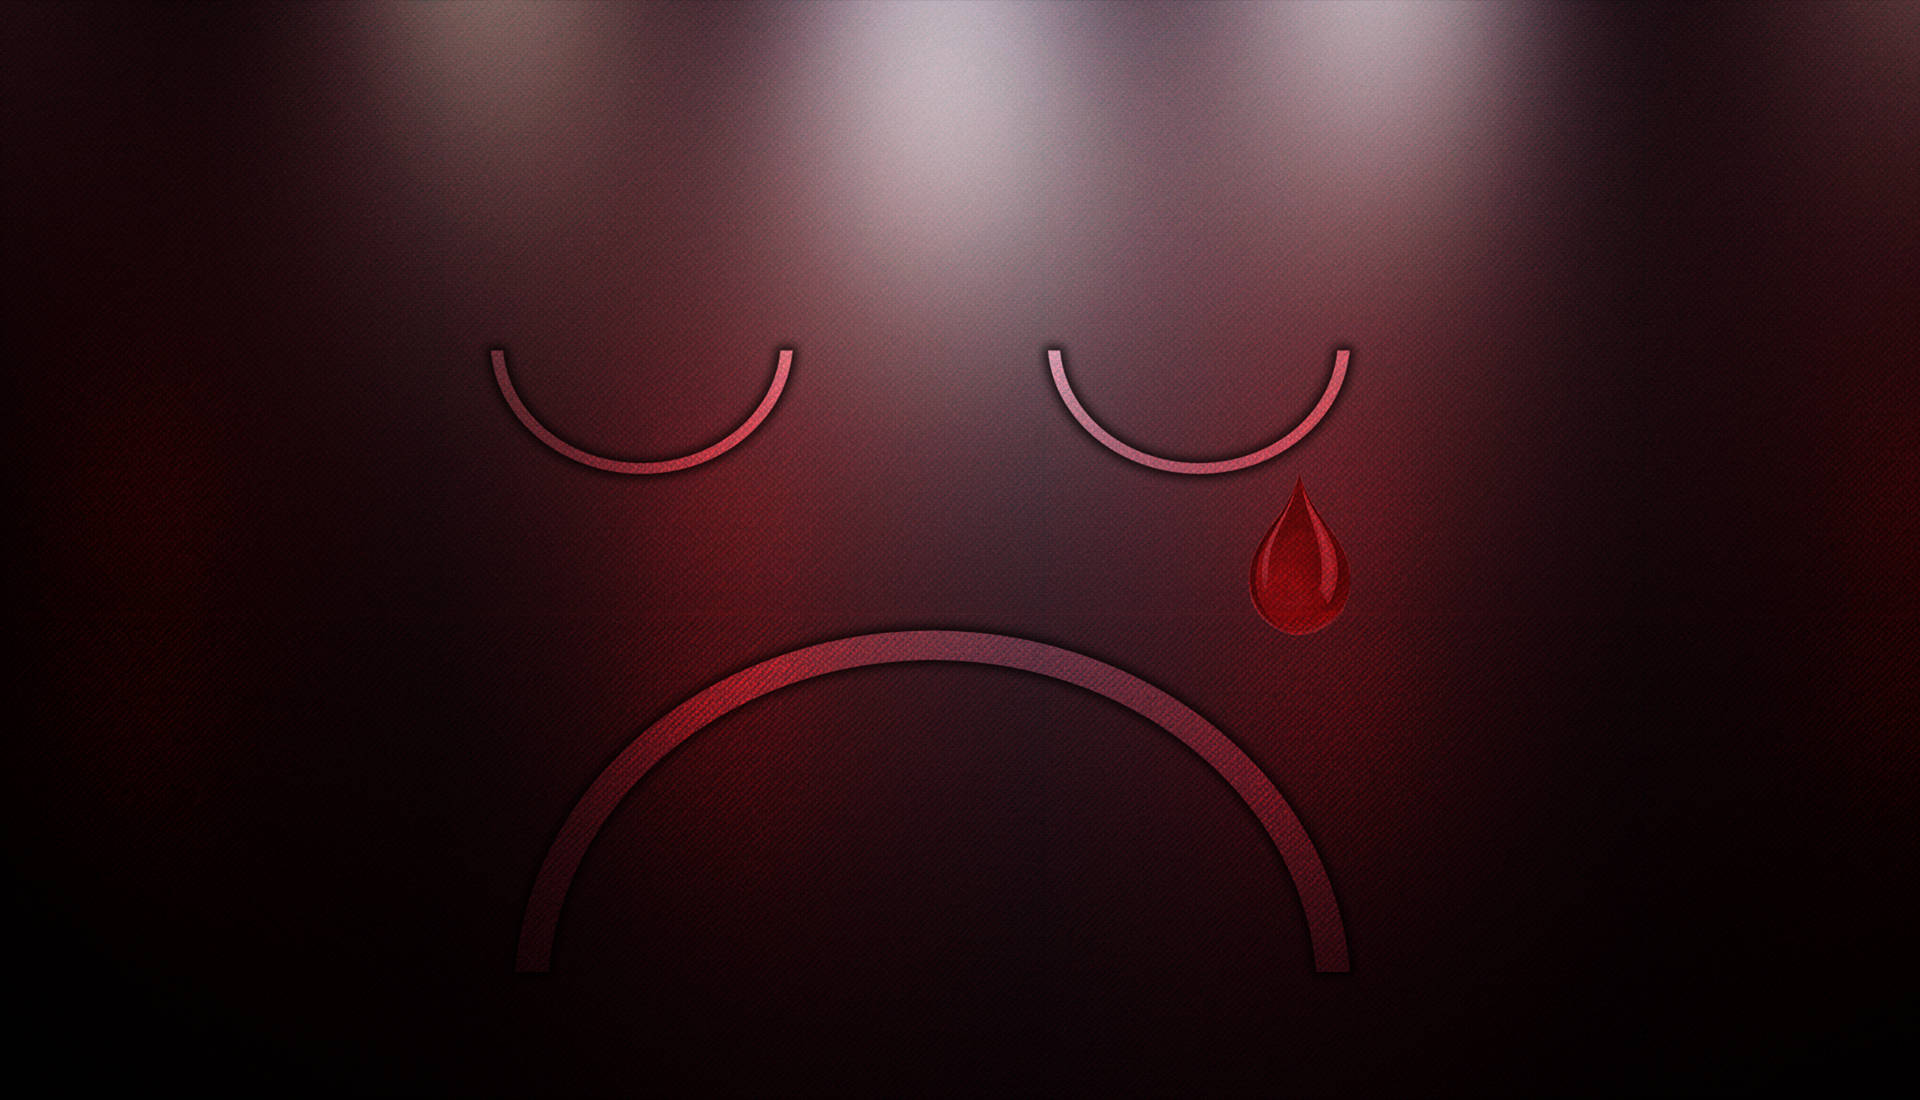 Unshed Tears of Sorrow - Sad Aesthetic Wallpaper